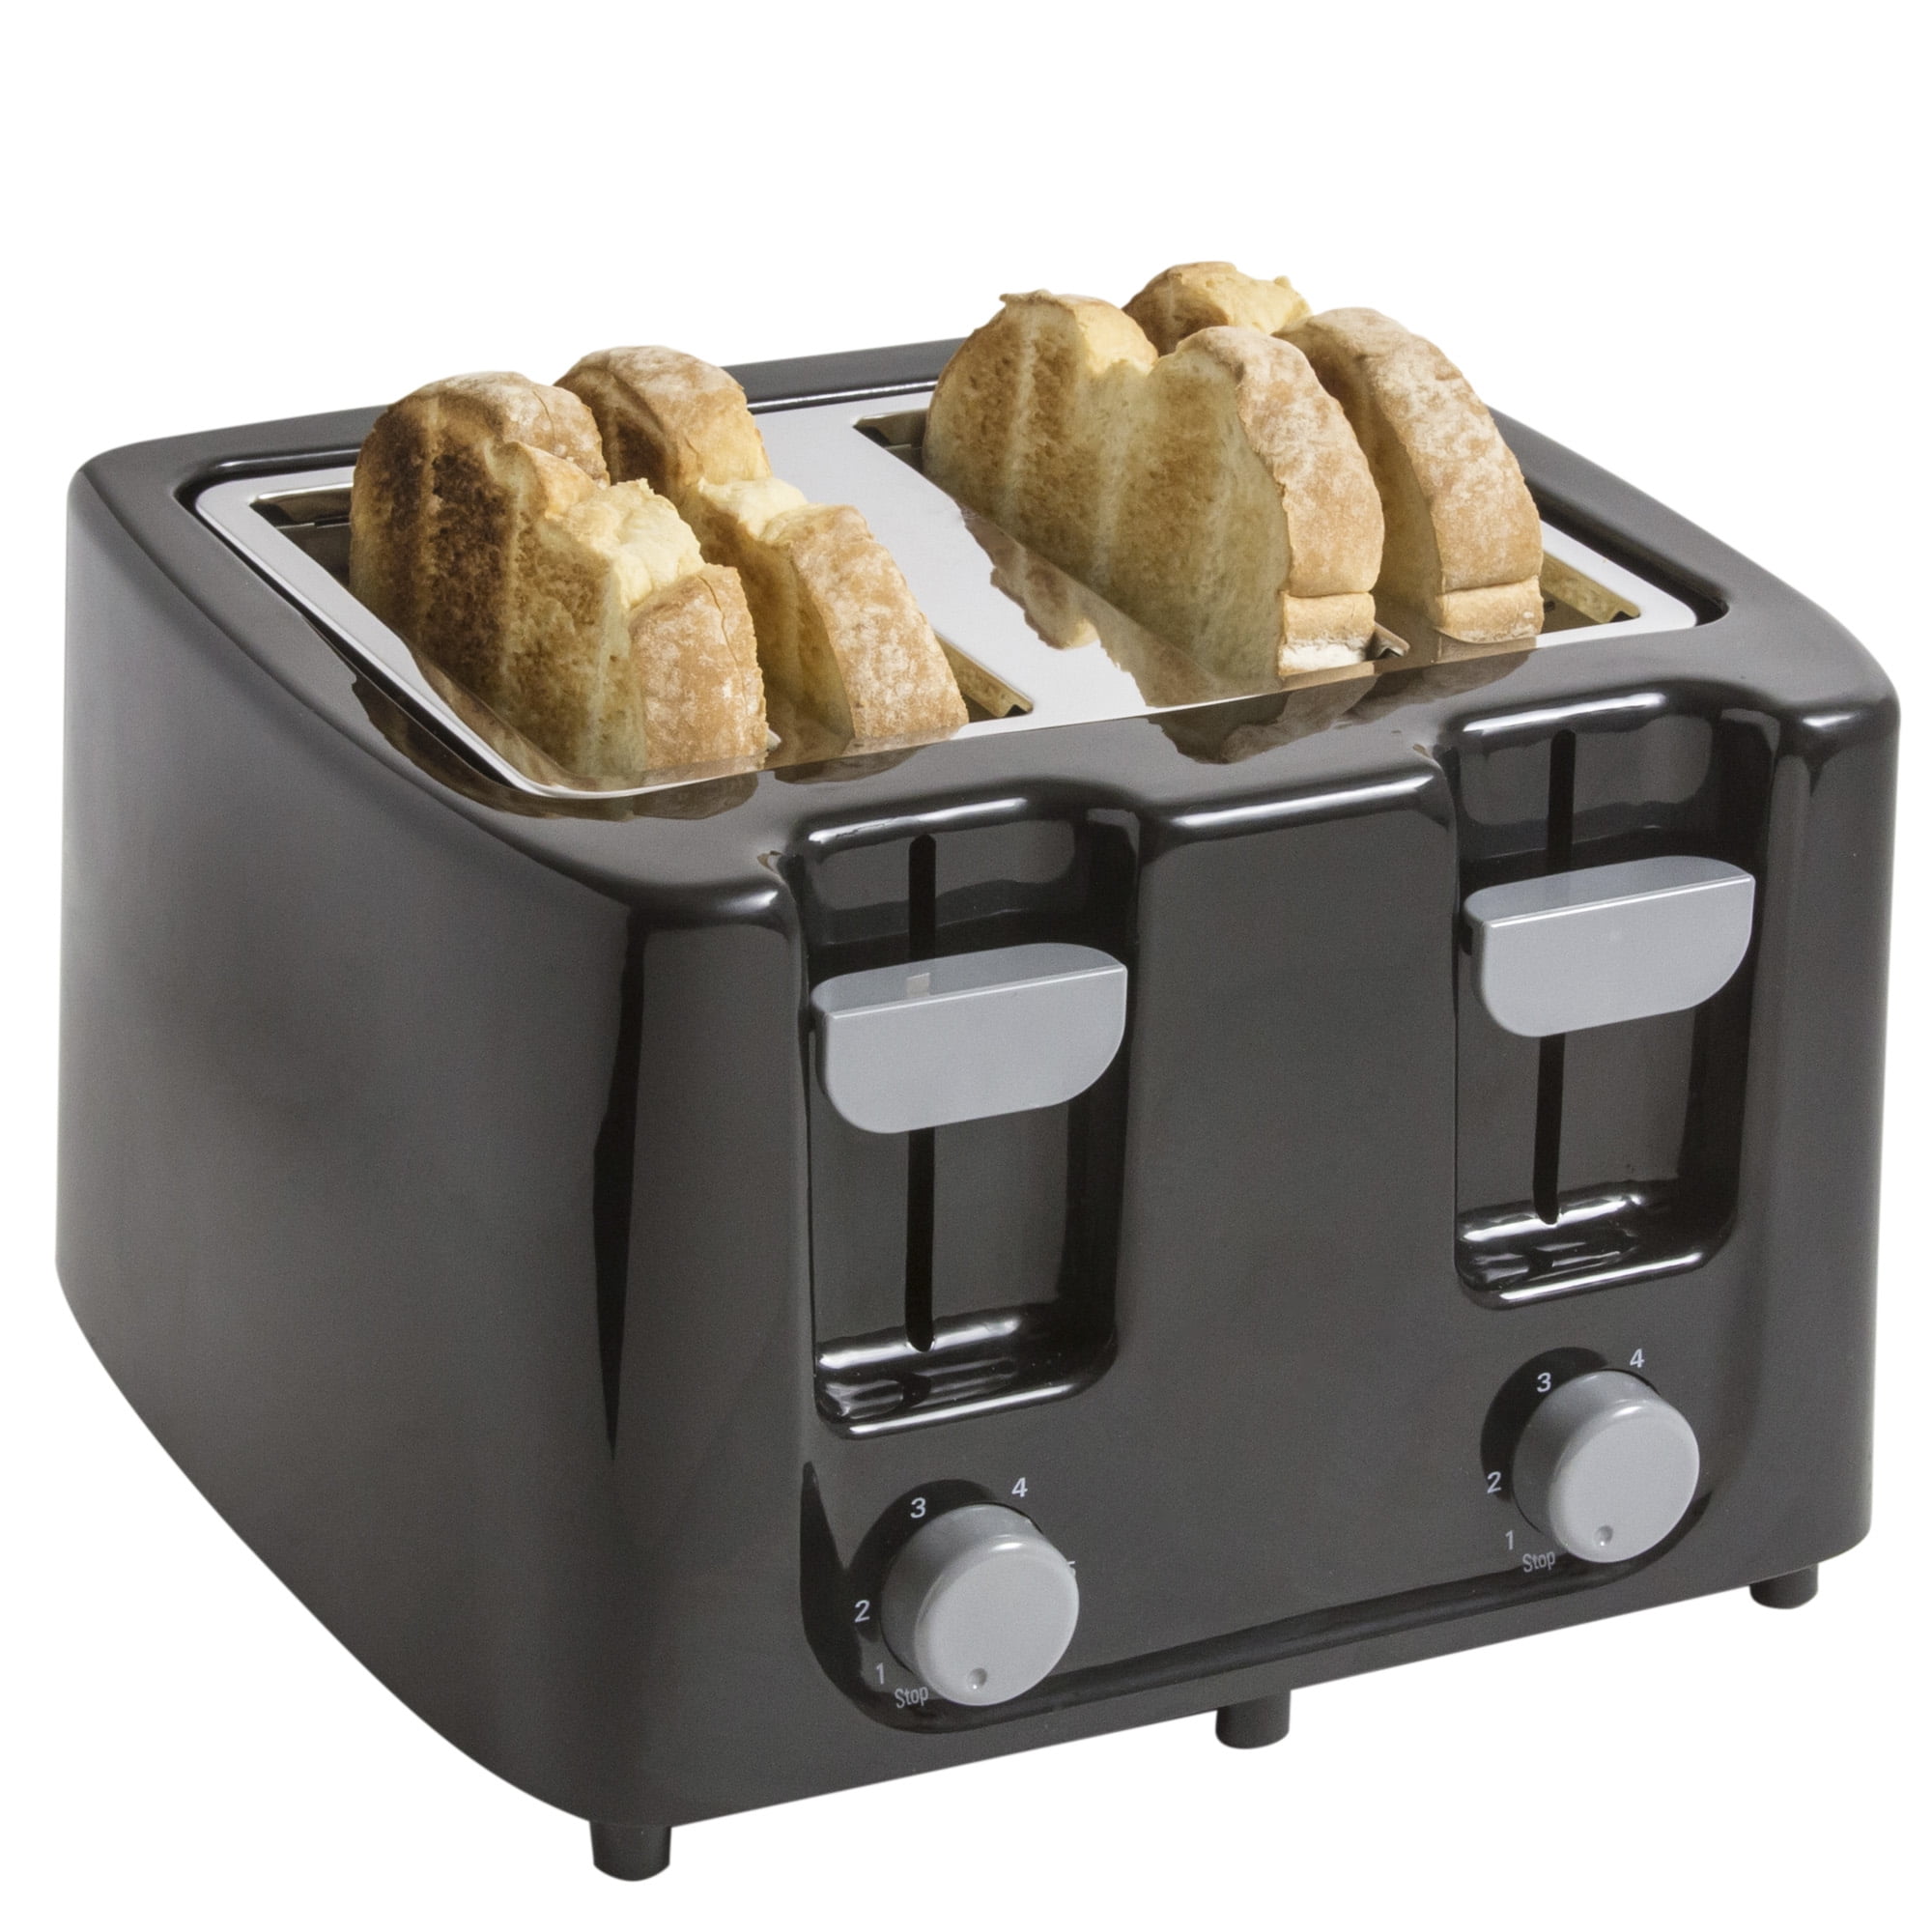 Hatco 4 Slice Pop-Up Toaster - 13 5/8L x 12 5/16W x 8 1/32H